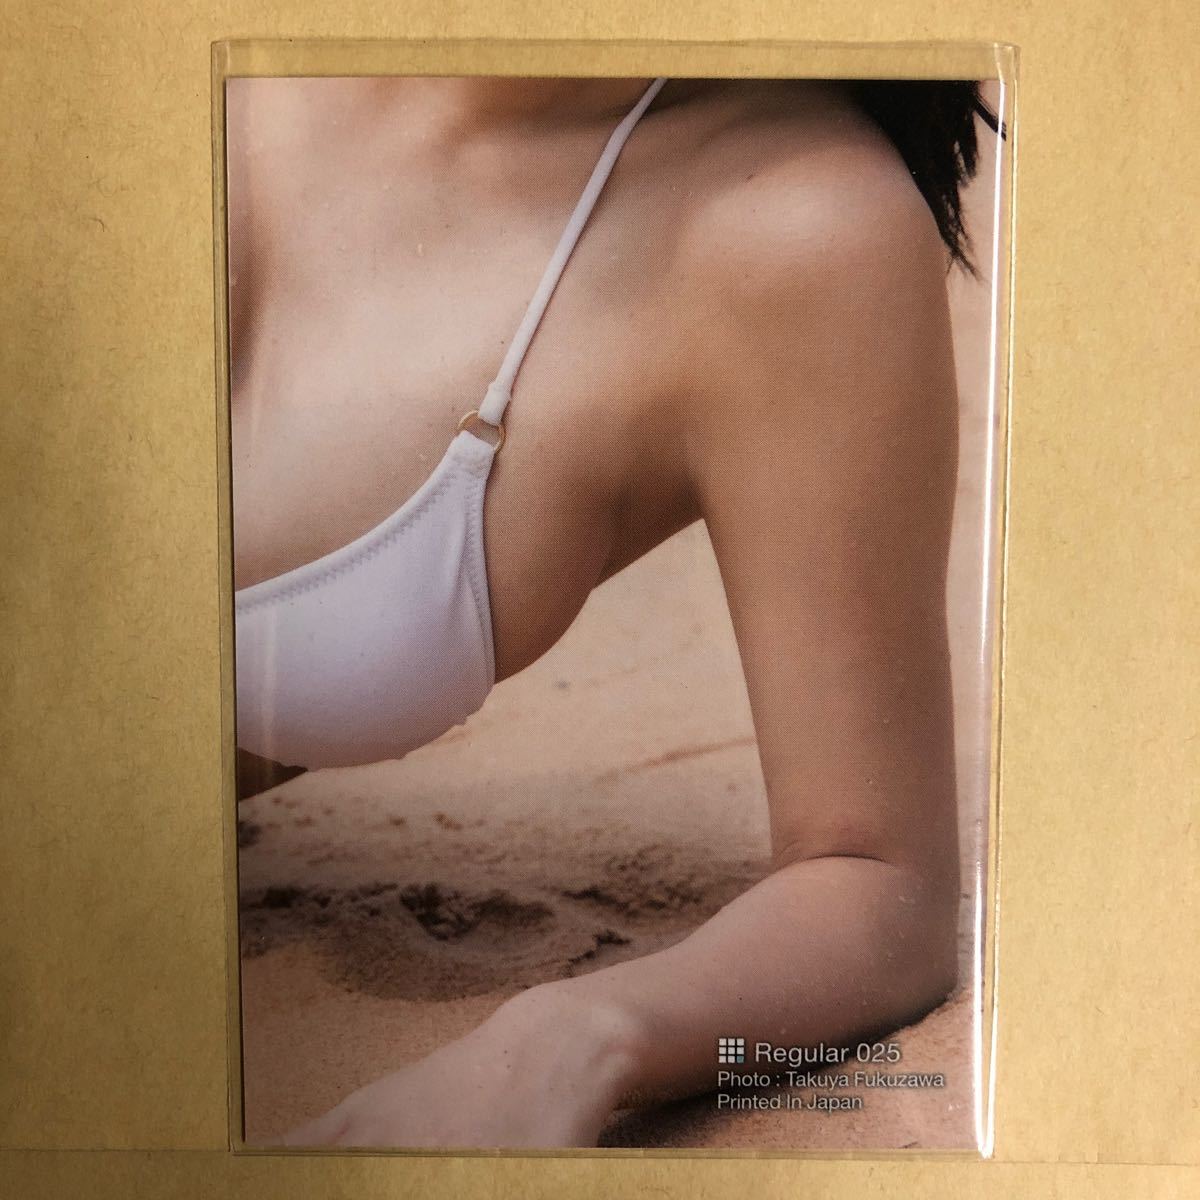 RaMu 2019 trading card idol gravure card swimsuit bikini 025 star First trading card 